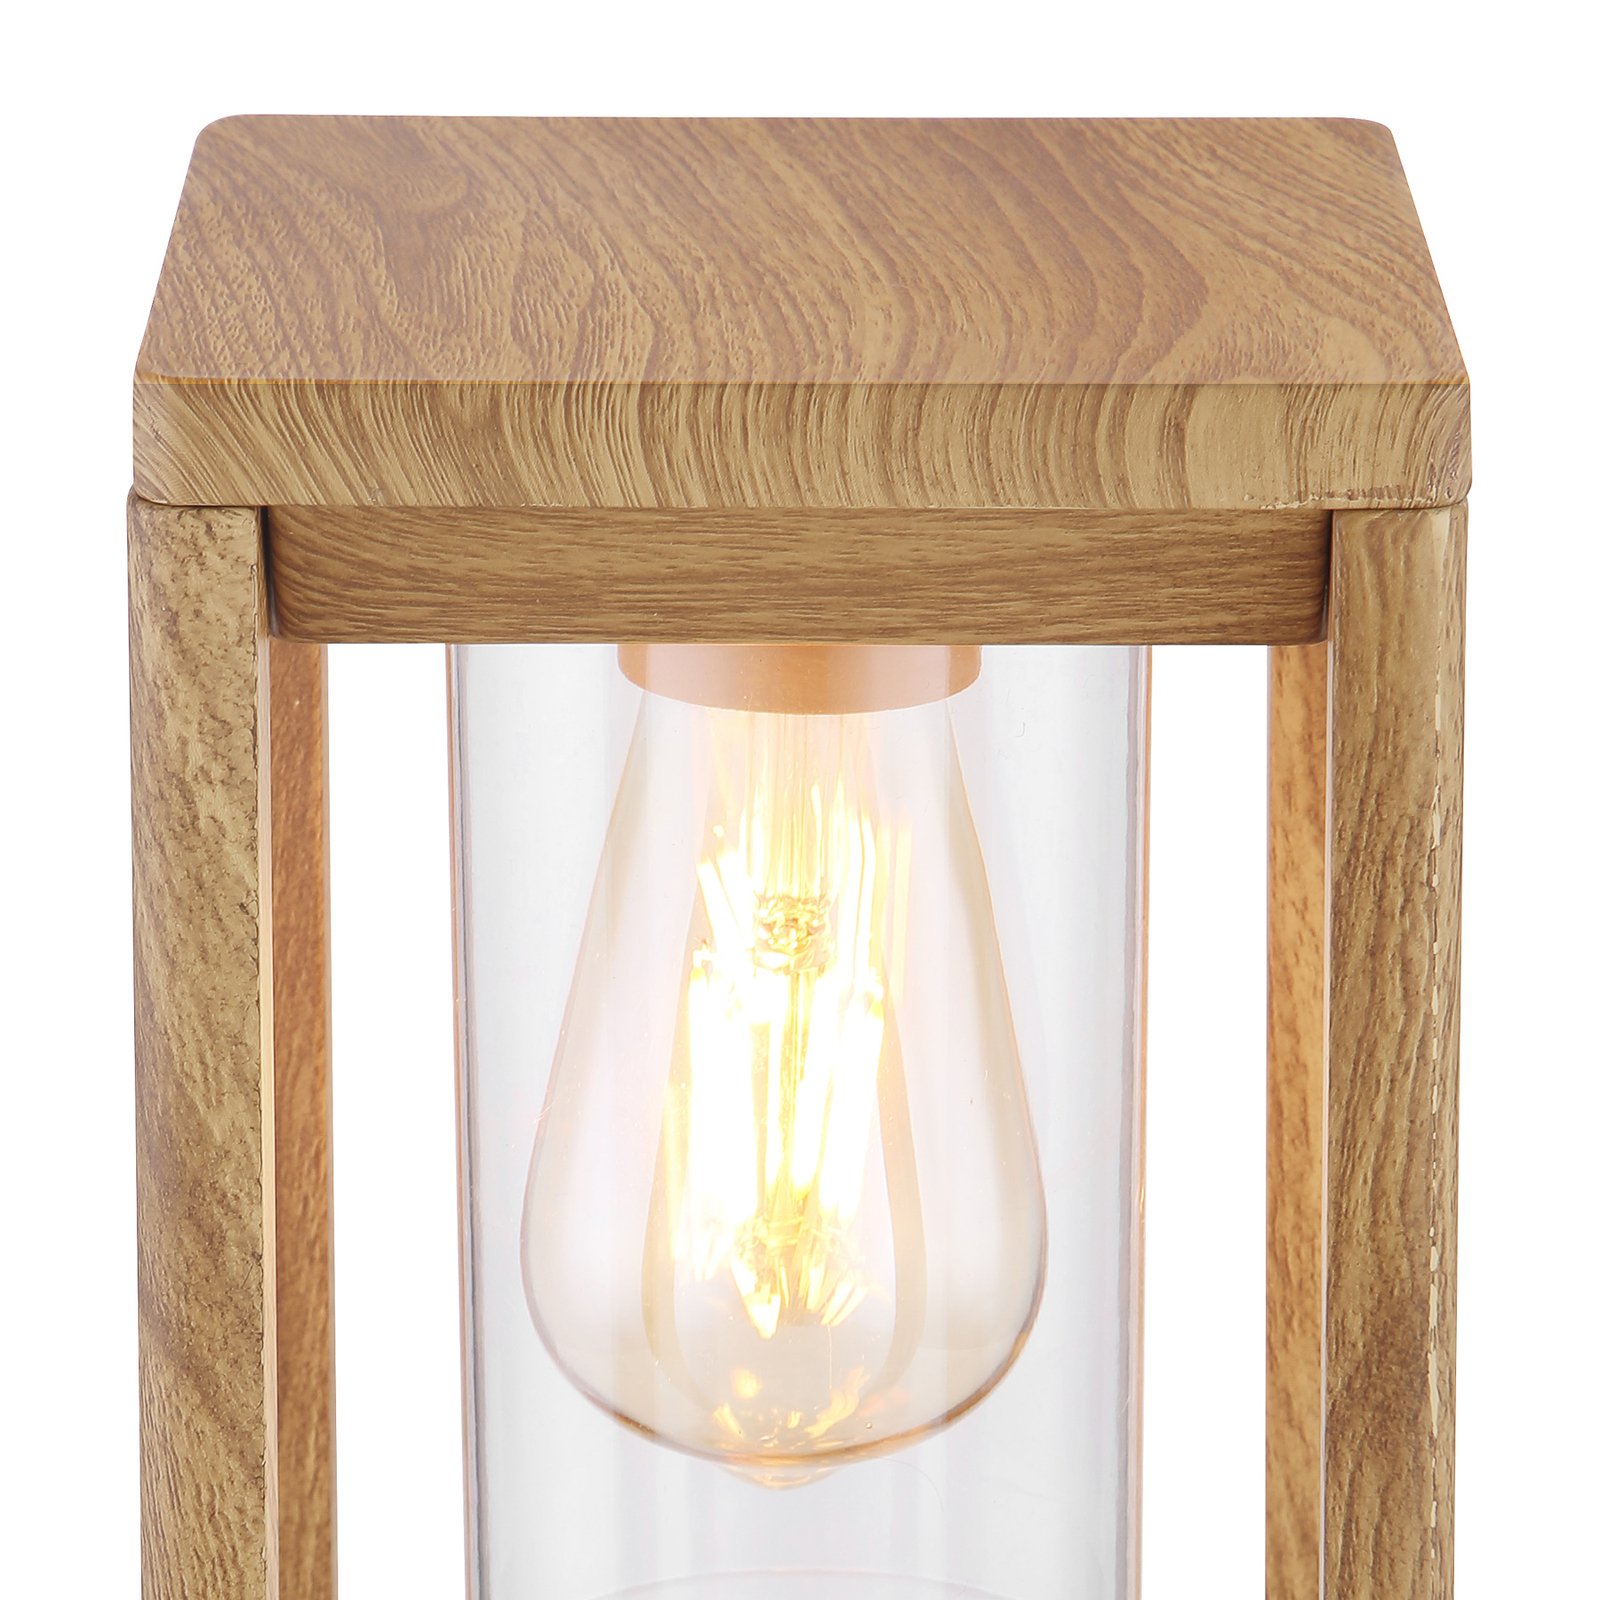 Candela pillar light in a wood look, height 35 cm